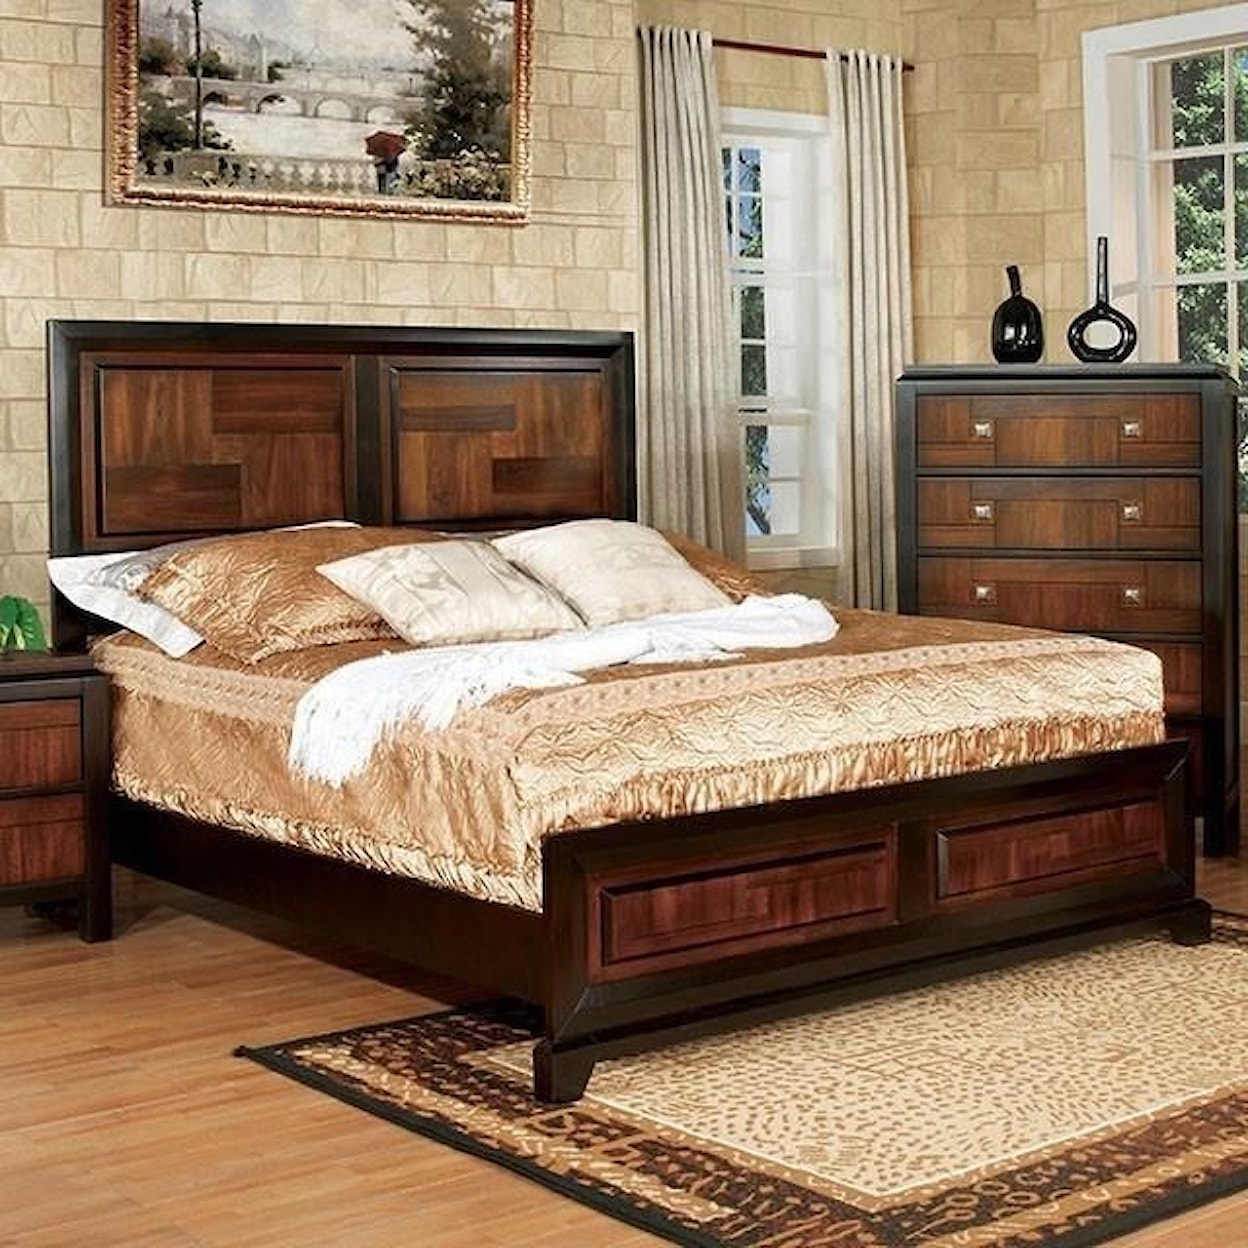 Furniture of America Patra Full Bed